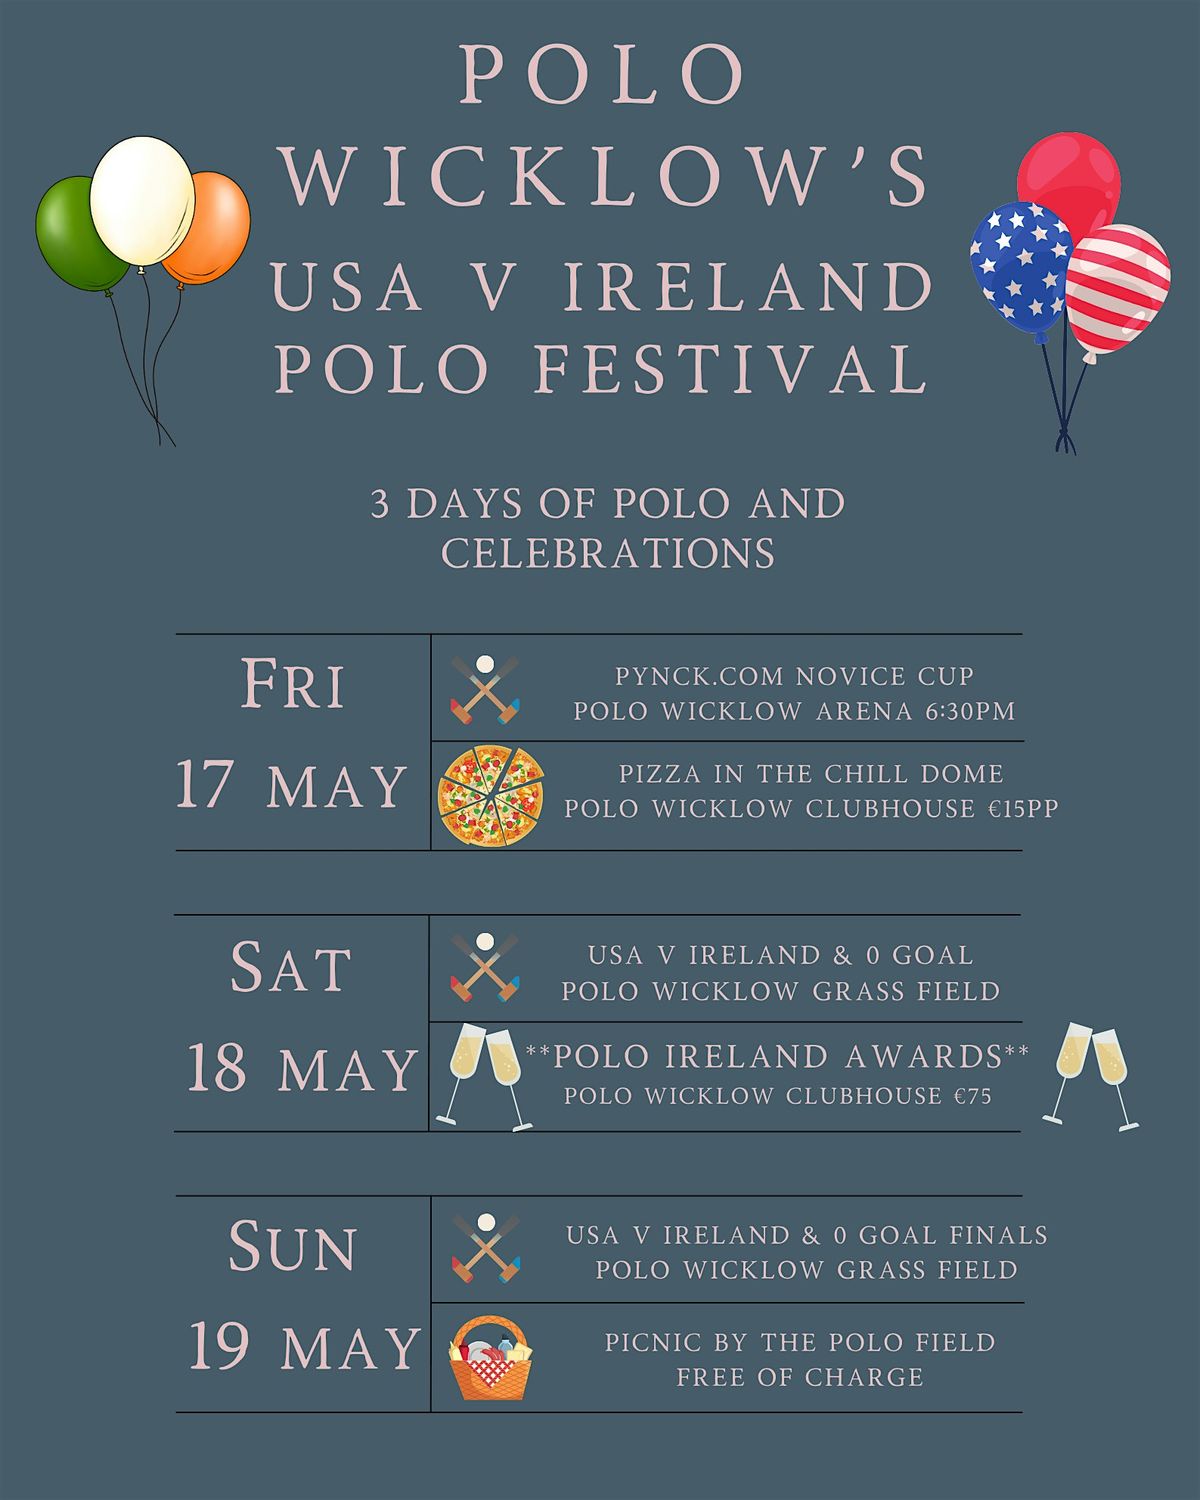 USA V Ireland Polo Festival